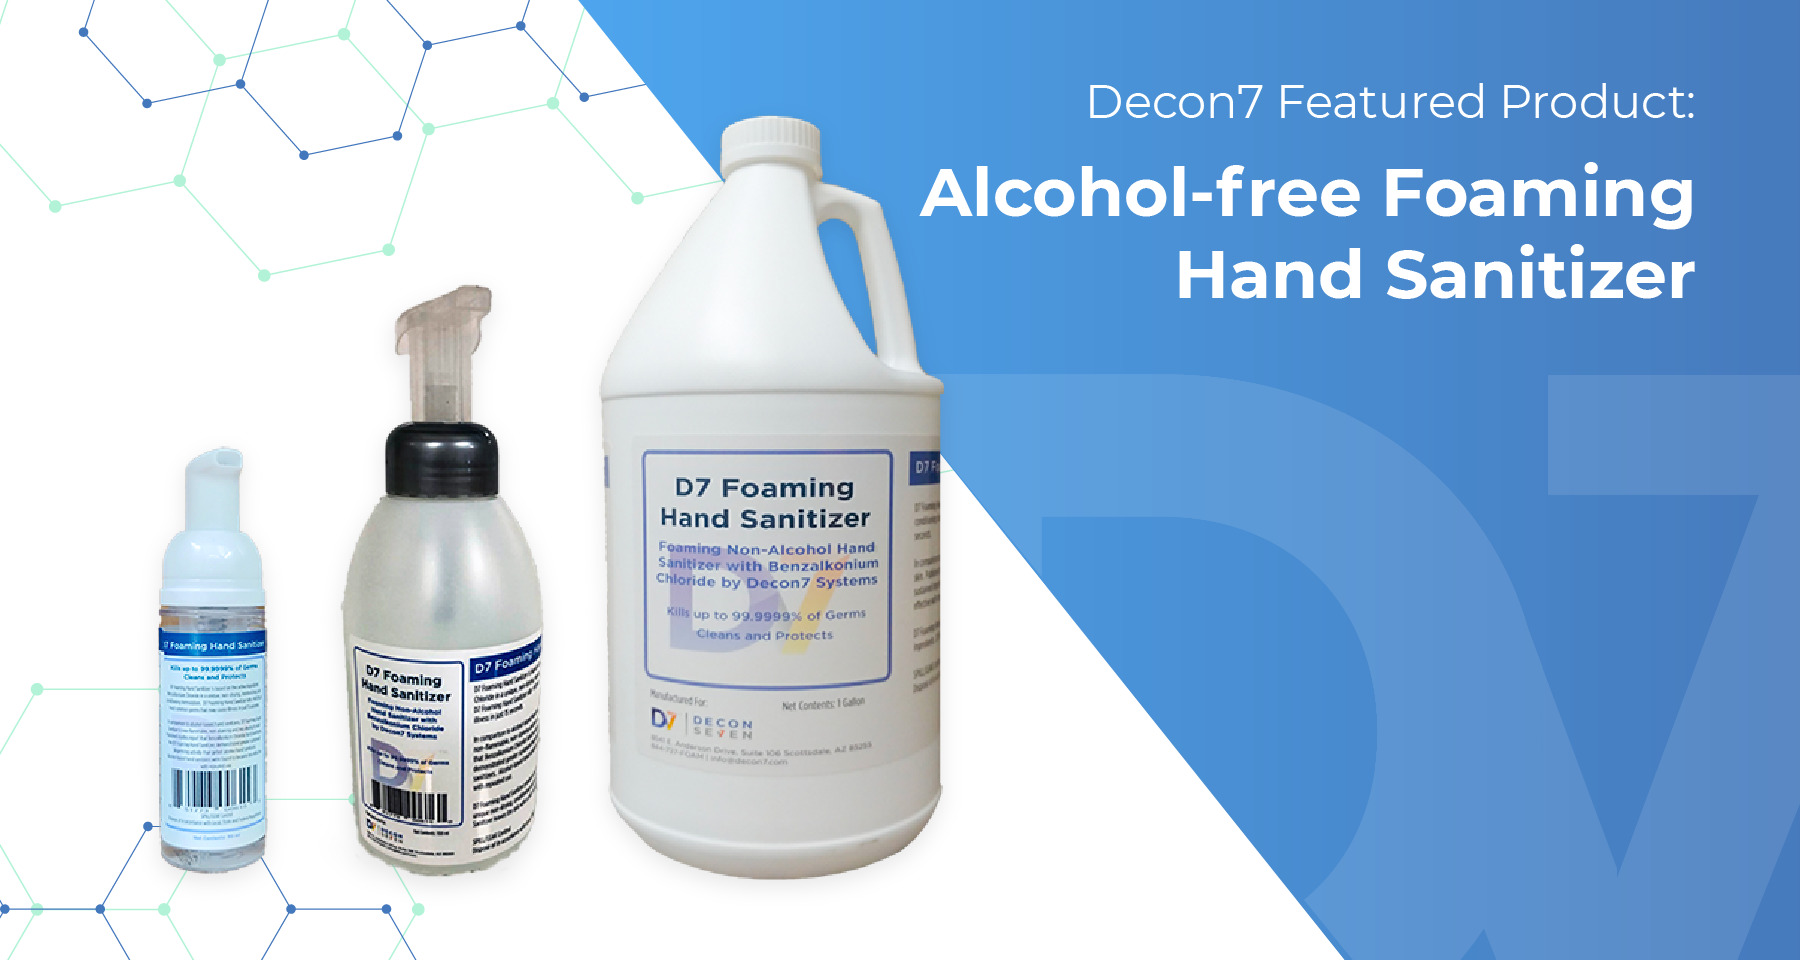 D7 Foaming Hand Sanitizer